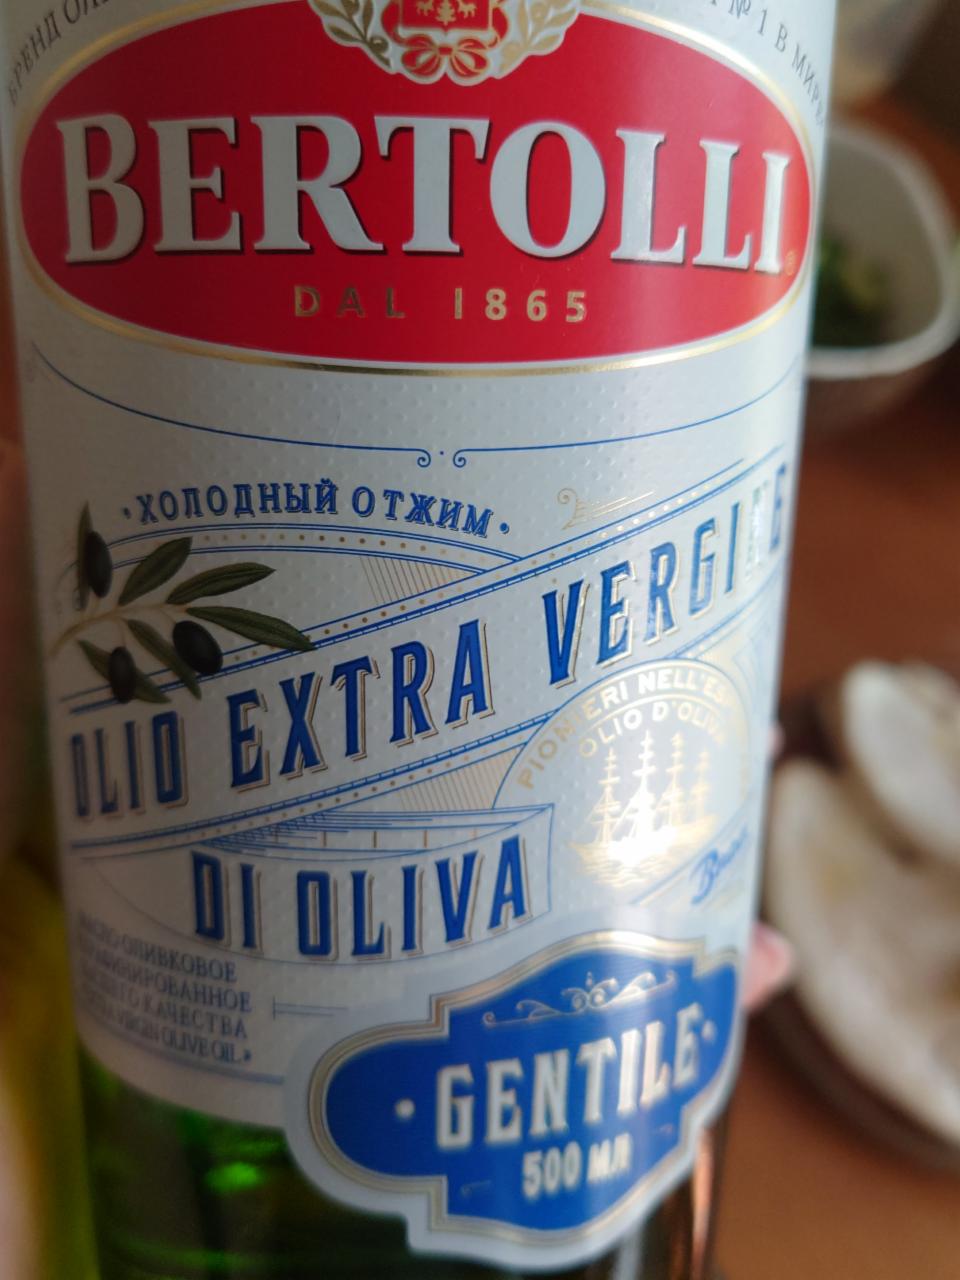 Фото - оливковое масло Gentile Bertolli